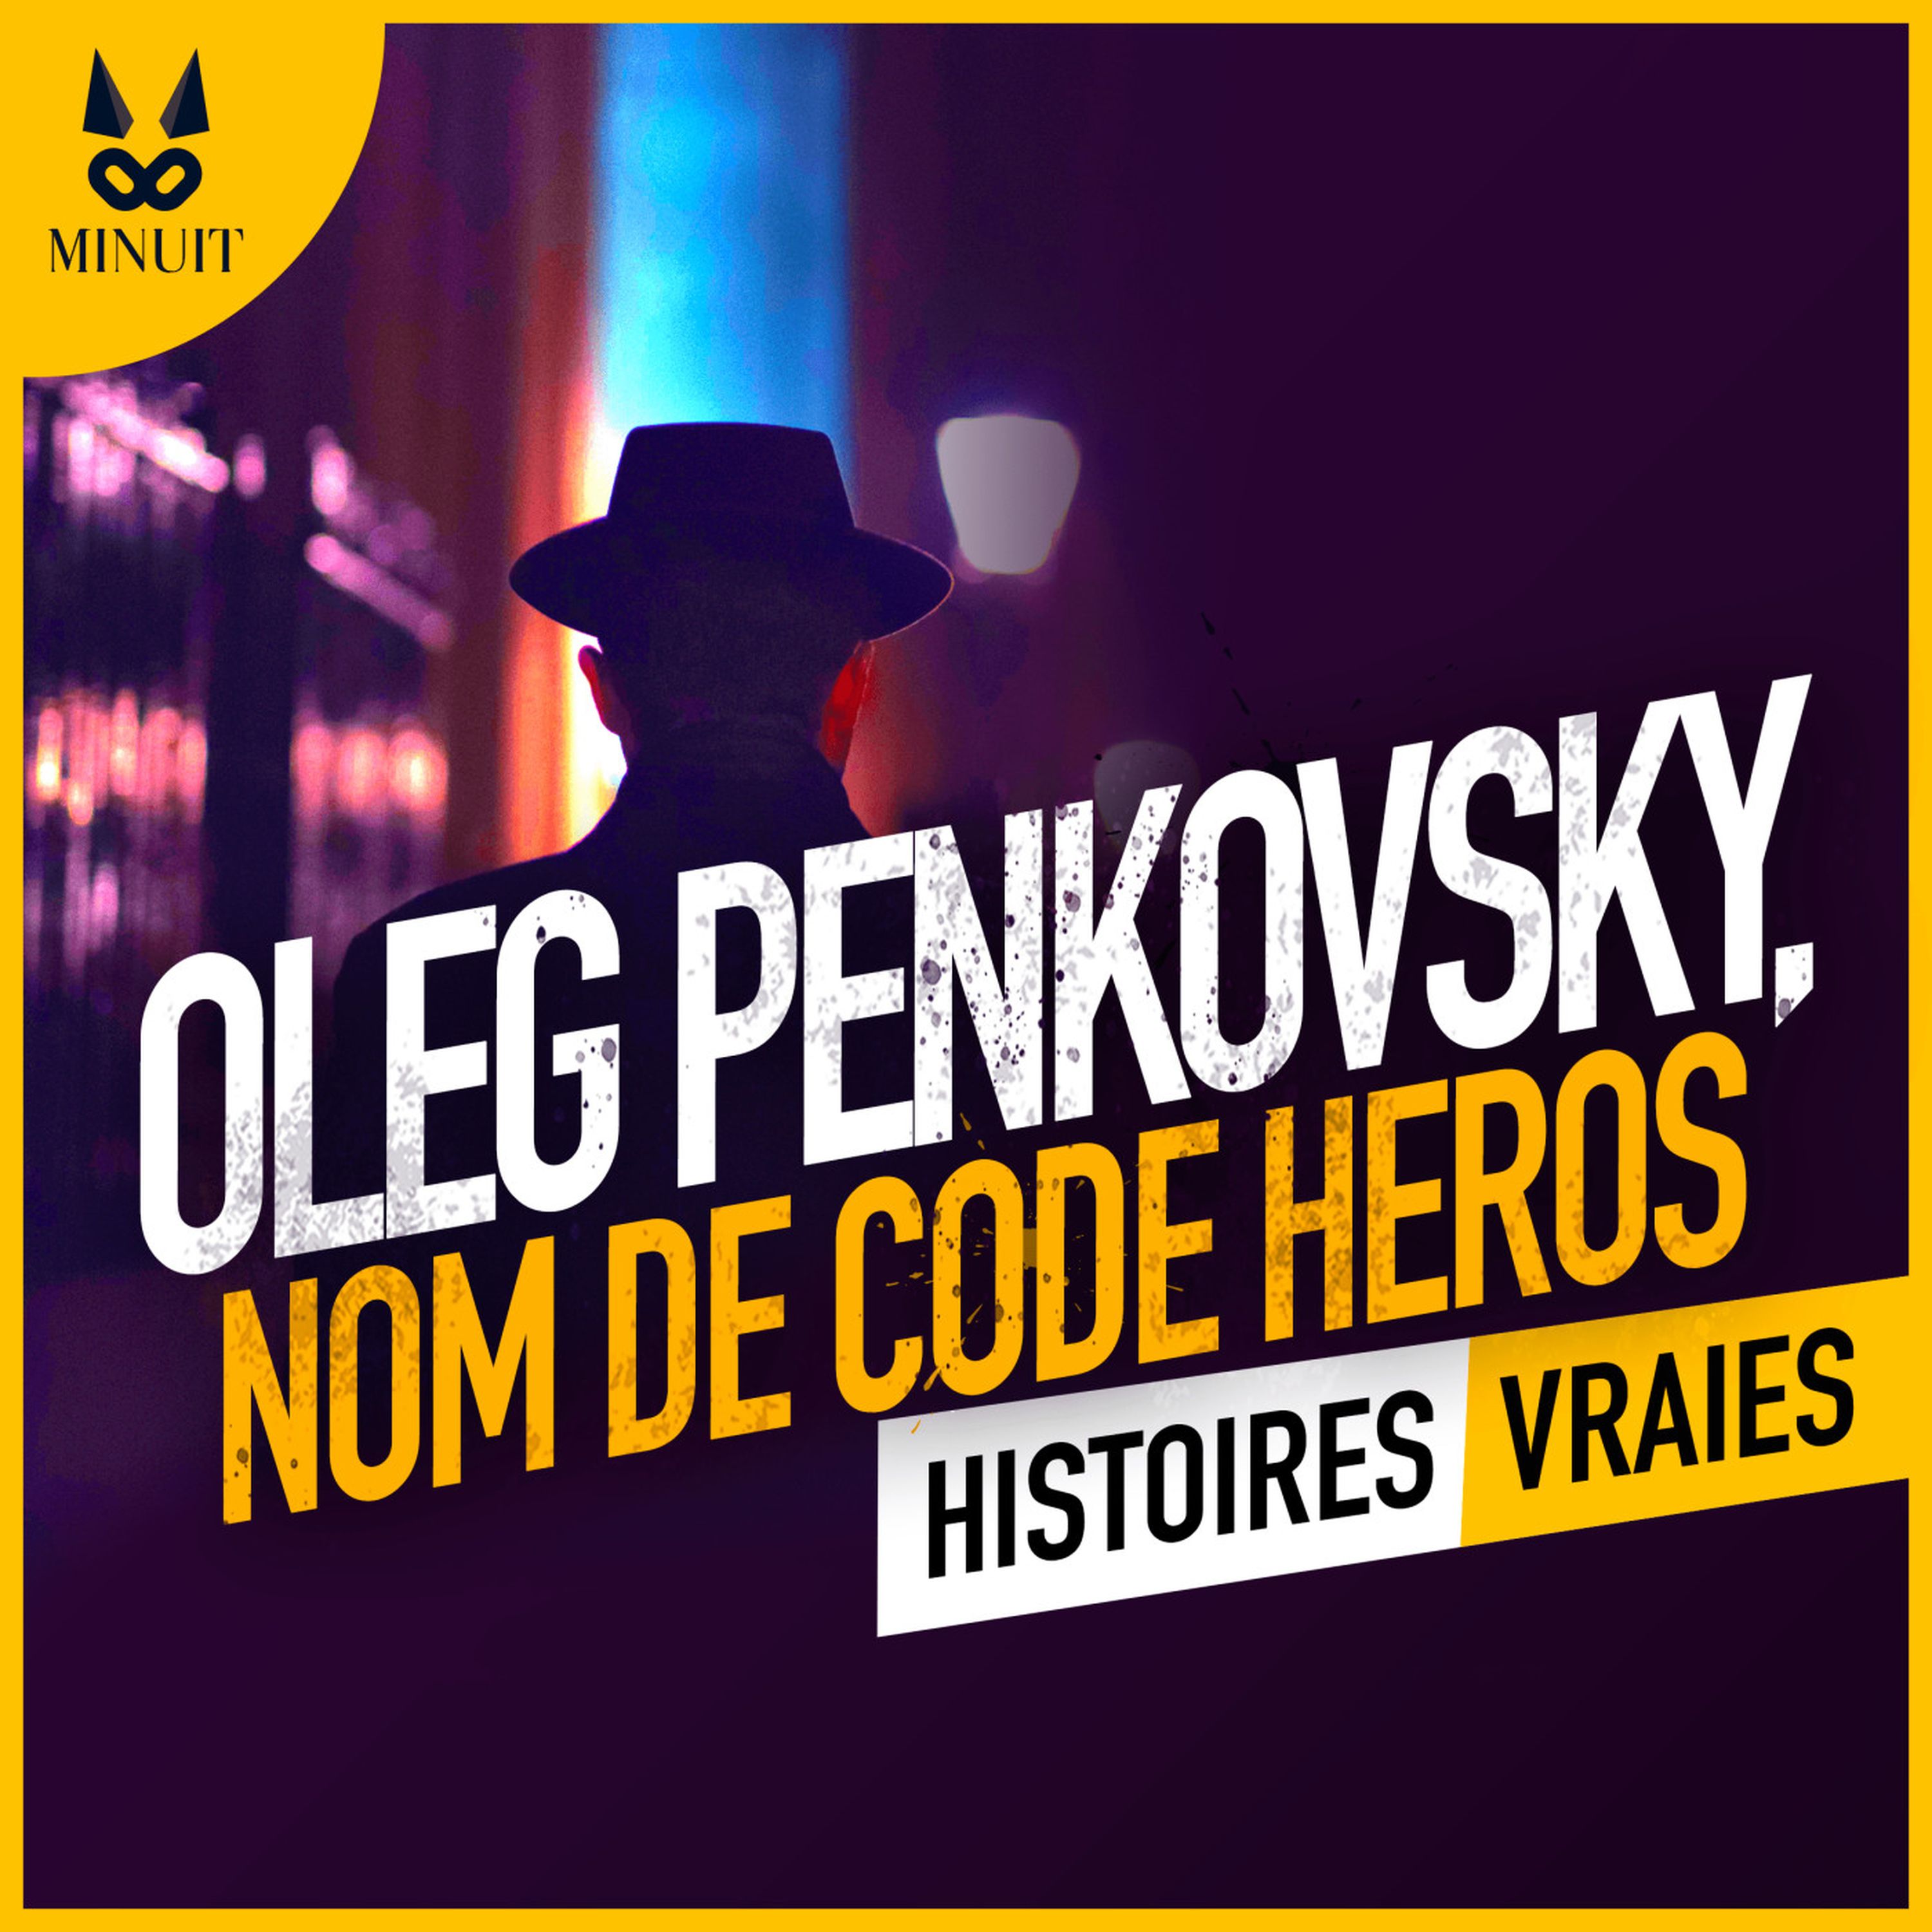 Oleg Penkovsky : nom de code Héros